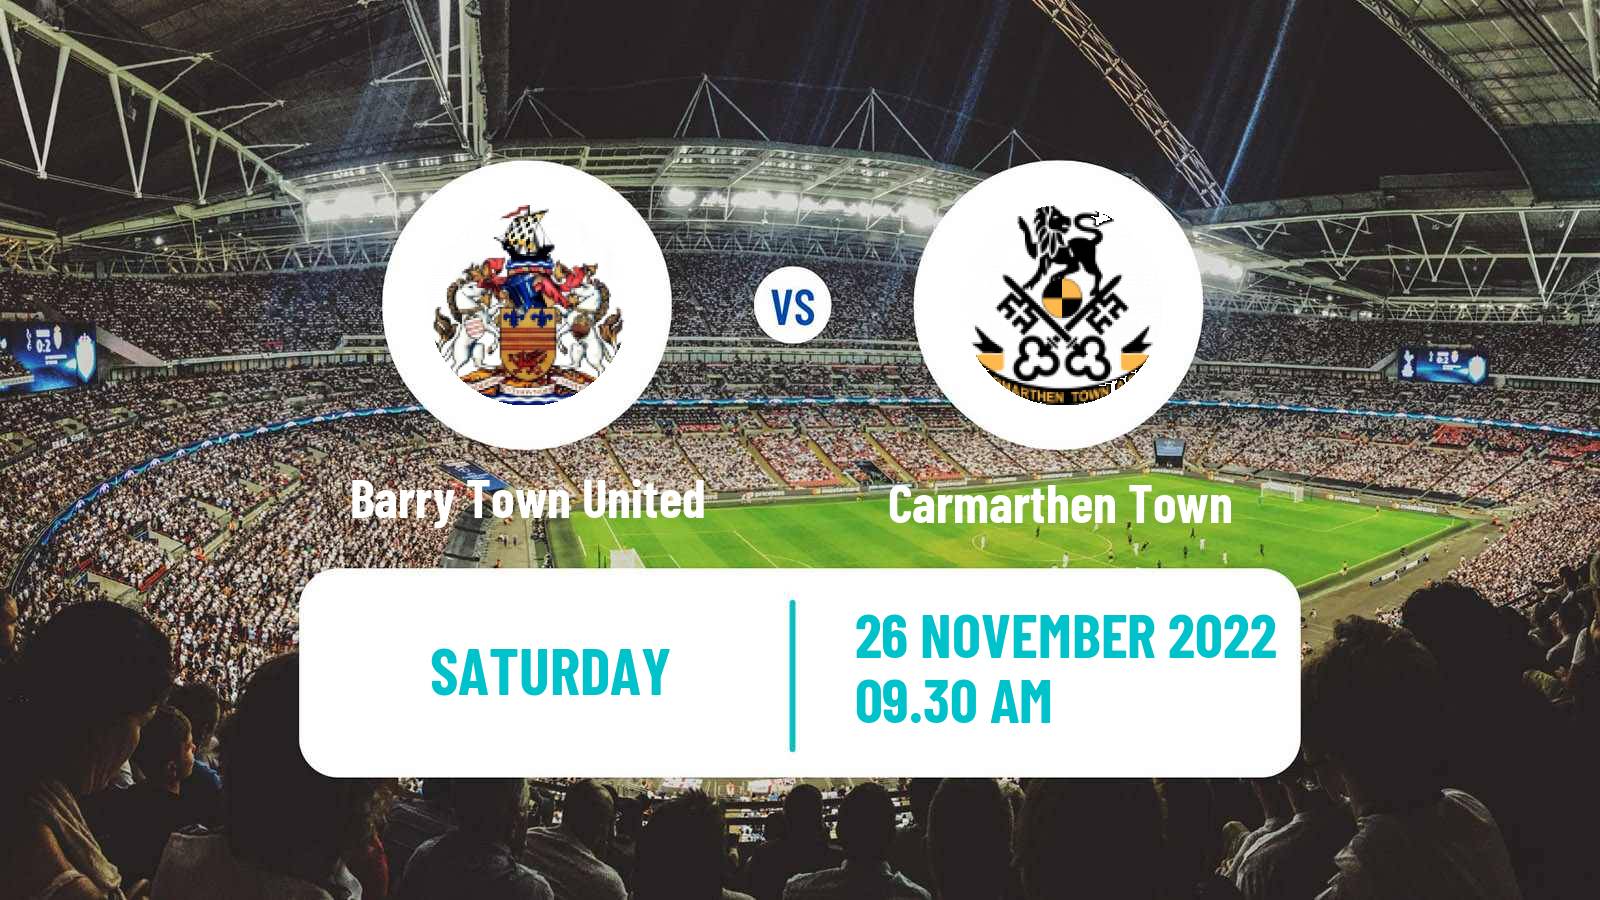 Soccer Welsh Cymru South Barry Town United - Carmarthen Town